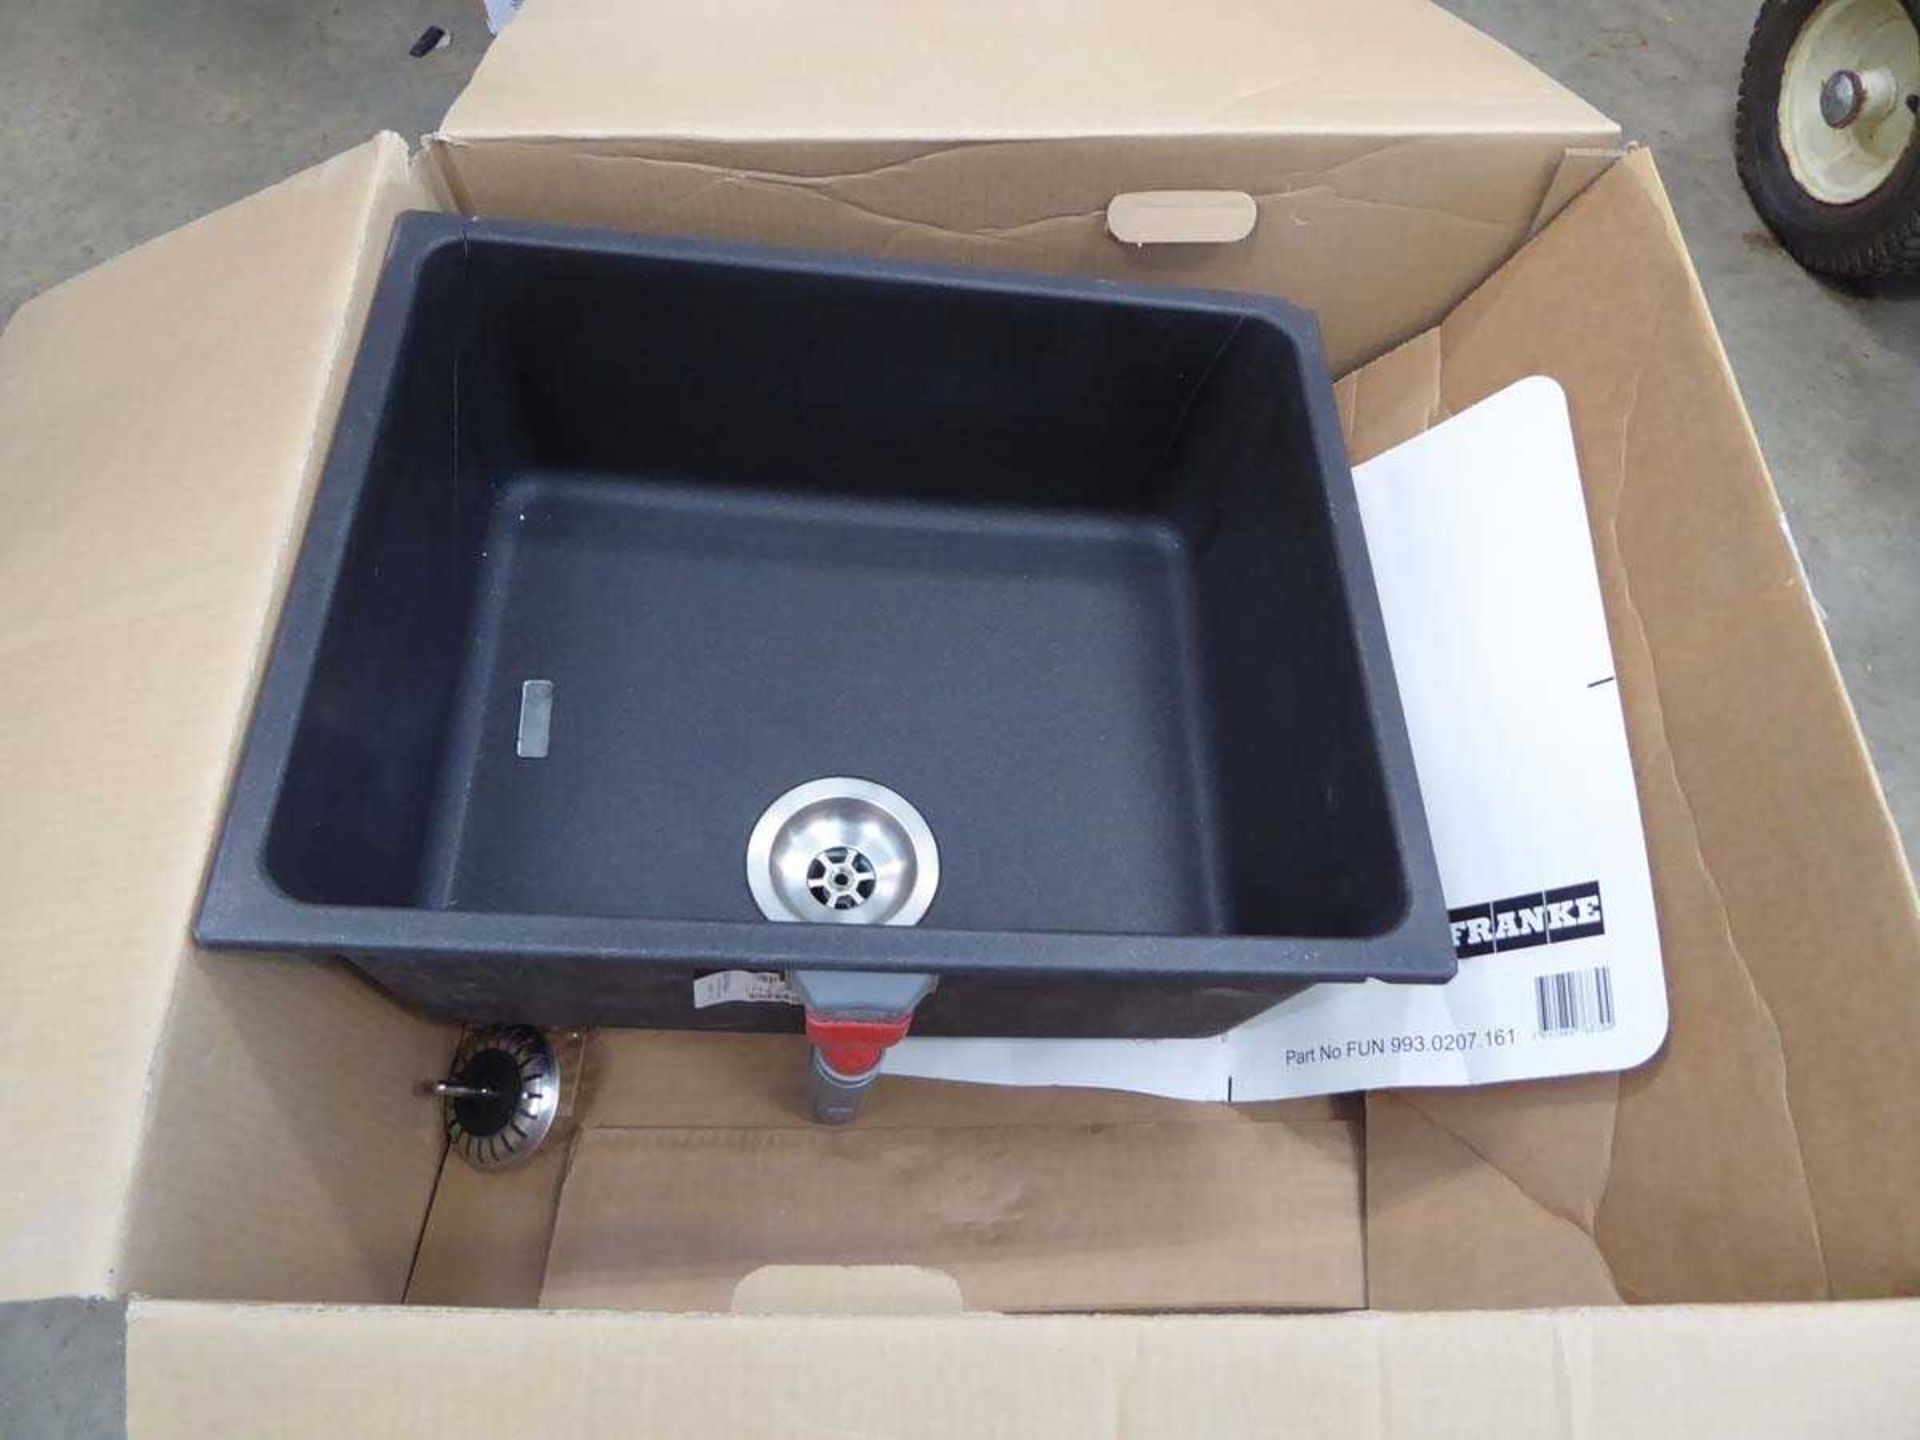 +VAT Frankie boxed sink